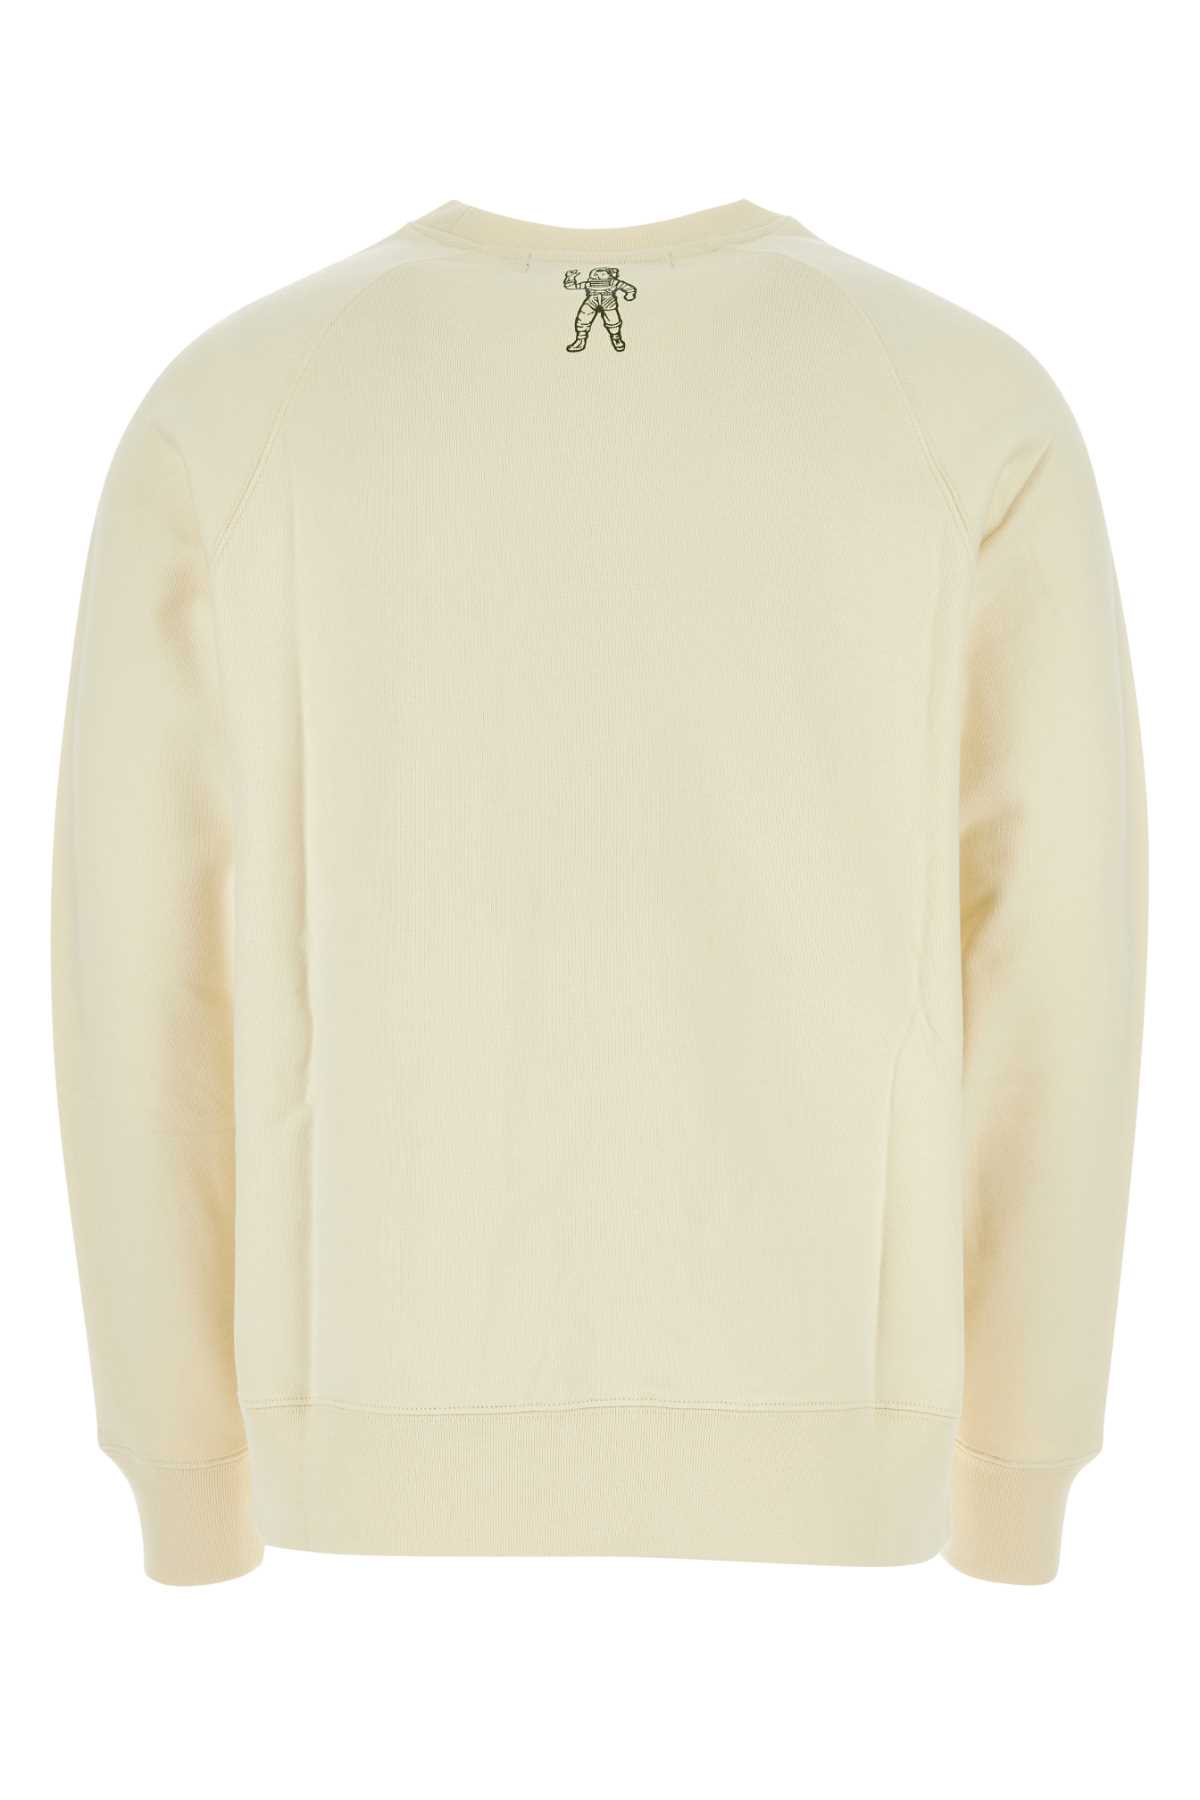 Billionaire Boys Club Ivory Cotton Sweatshirt In Cream